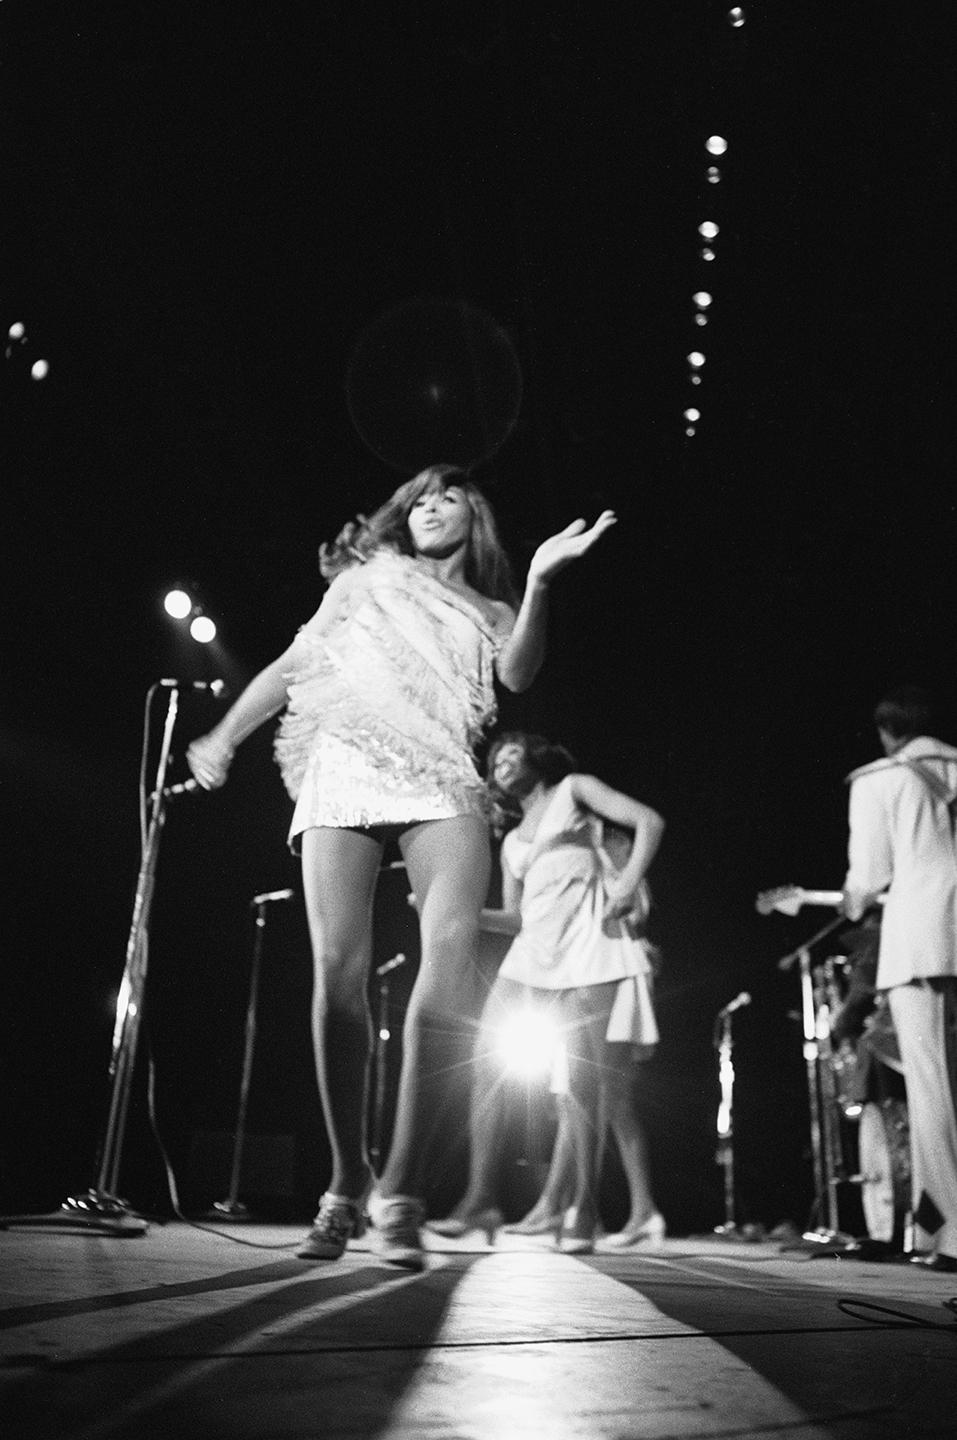 Jack Robinson Portrait Photograph - Tina Turner on Stage